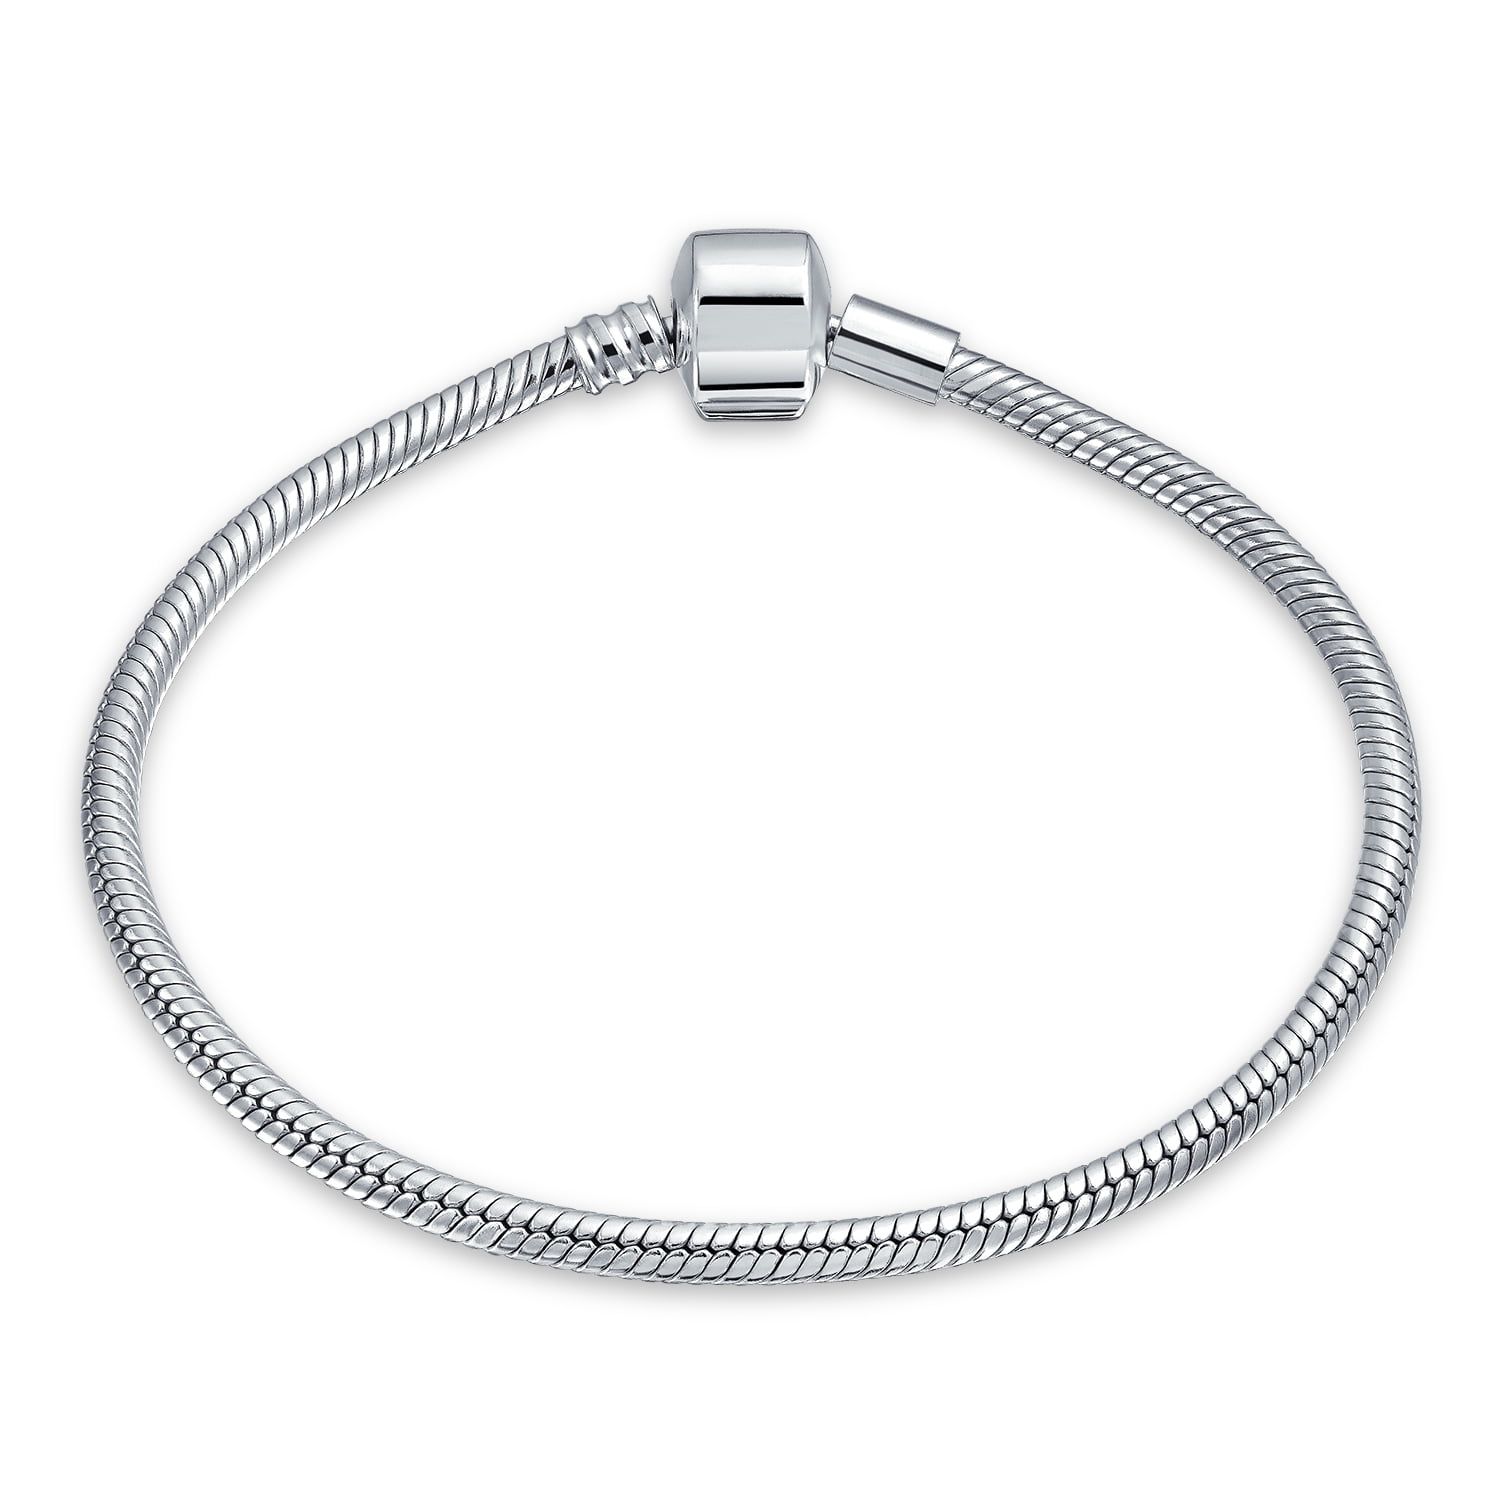 Vintage Silver Plated Crystal Fine Bracelet For Women Fit Snake Chain Charm Bracelet DIY Jewelry Gift C019 18cm 